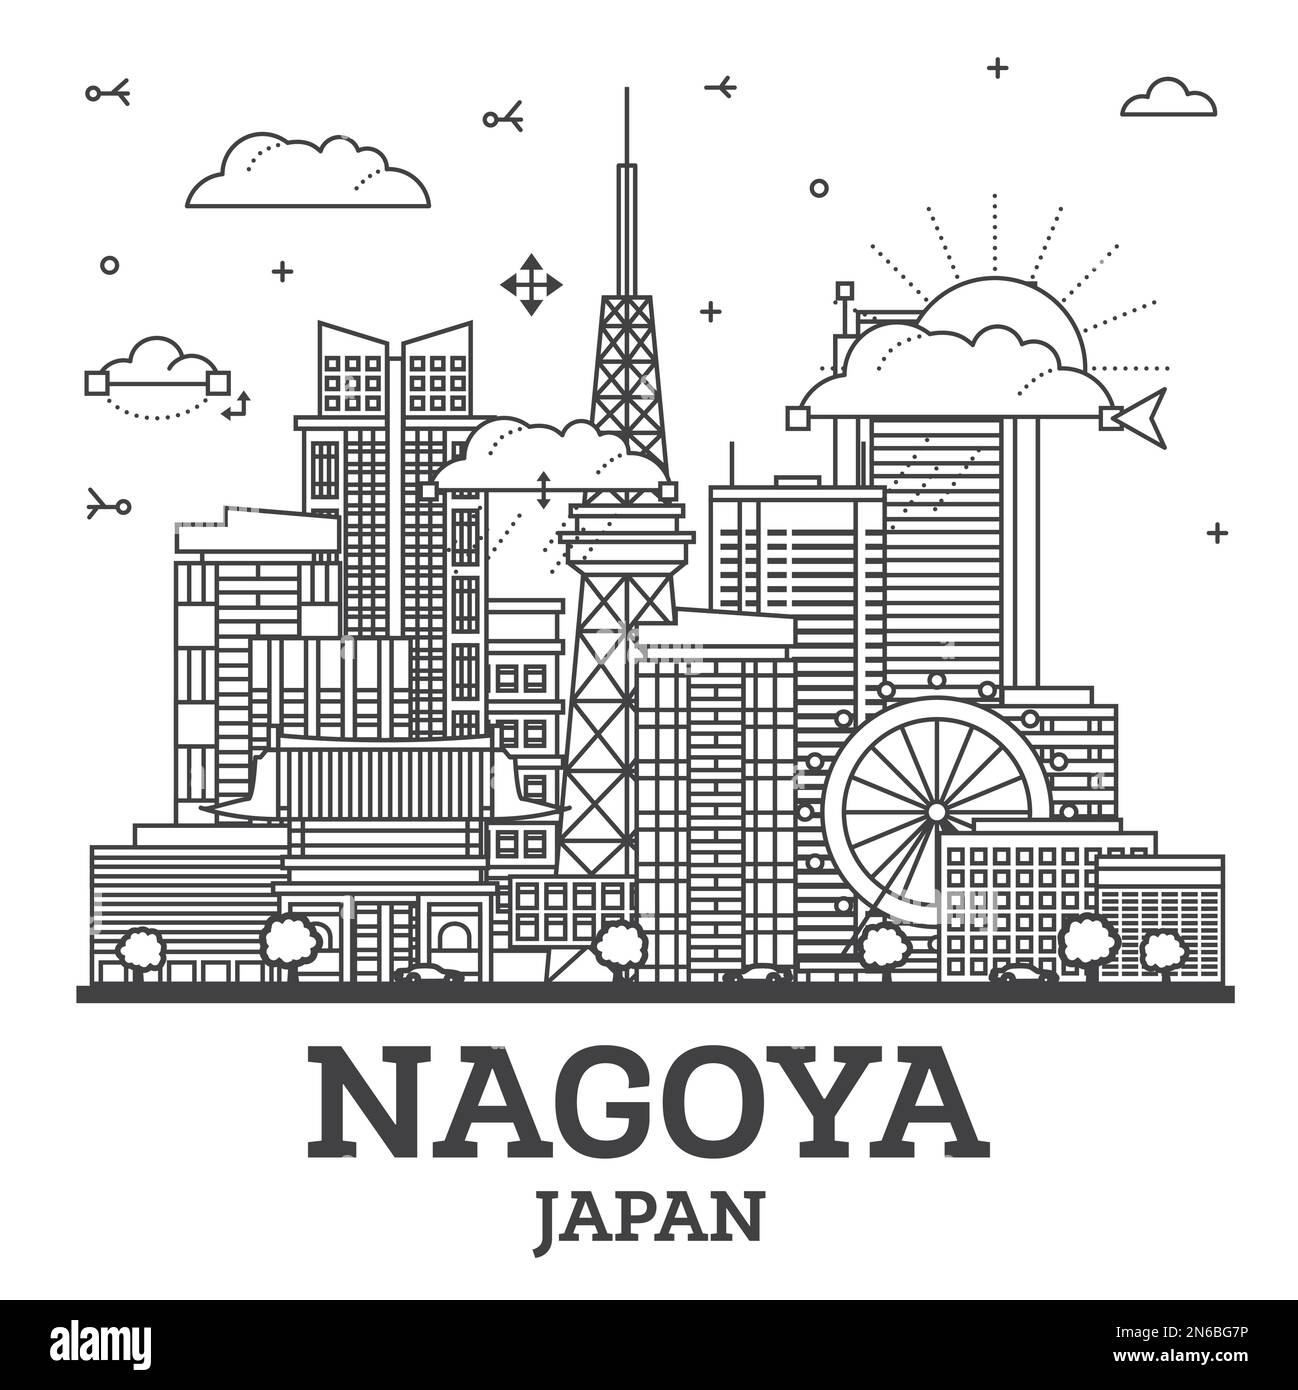 Outline Nagoya Japan City Skyline with Modern Buildings Isolated on White. Vector Illustration. Nagoya Cityscape with Landmarks. Stock Vector